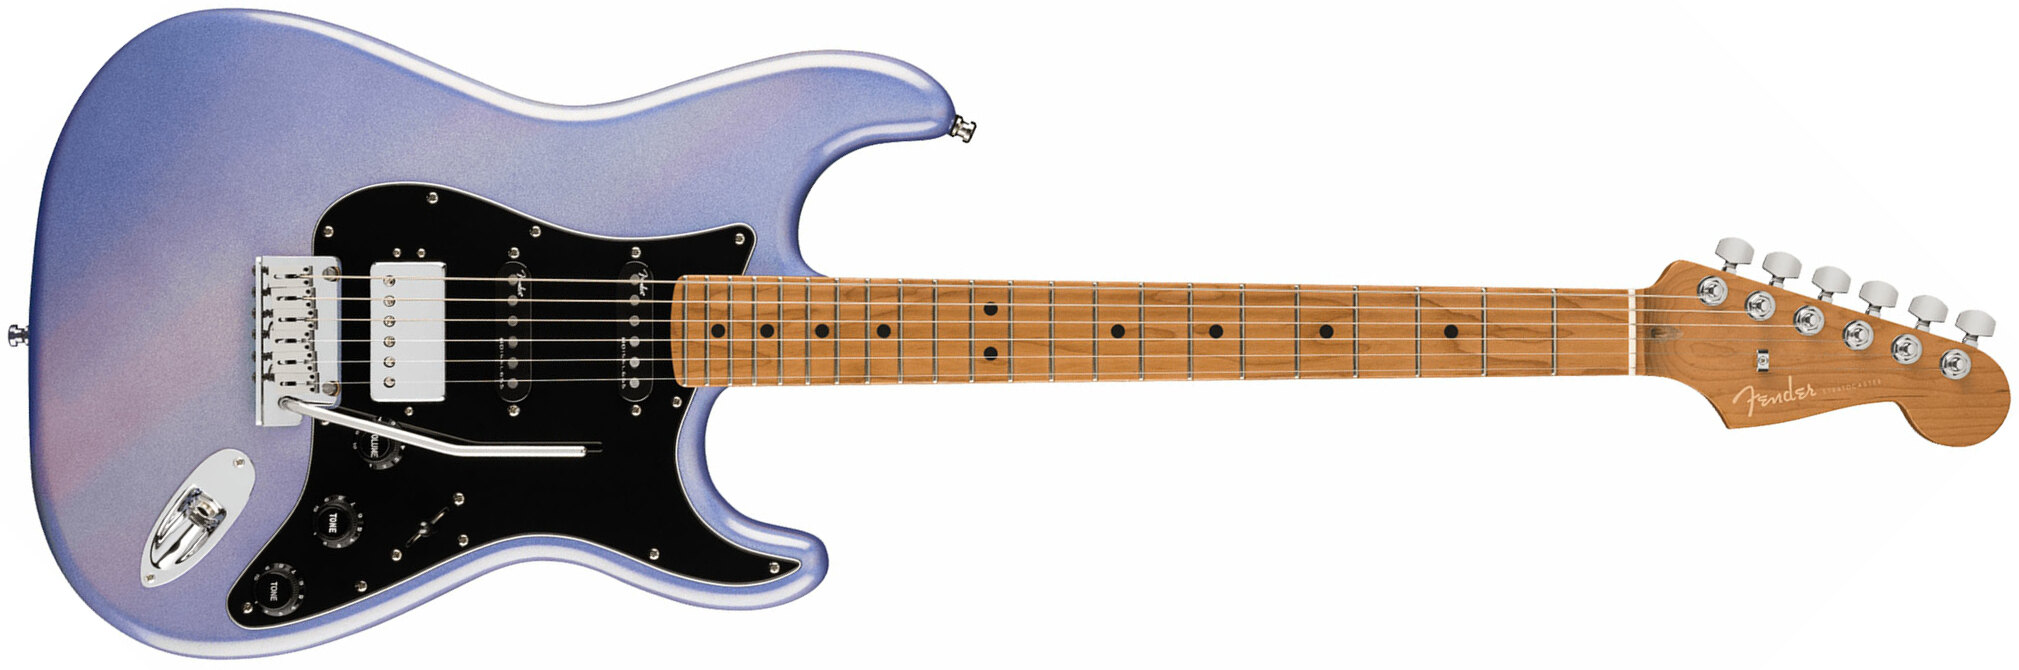 Fender Strat 70th Anniversary American Ultra Ltd Usa Hss Trem Mn - Amethyst - Elektrische gitaar in Str-vorm - Main picture